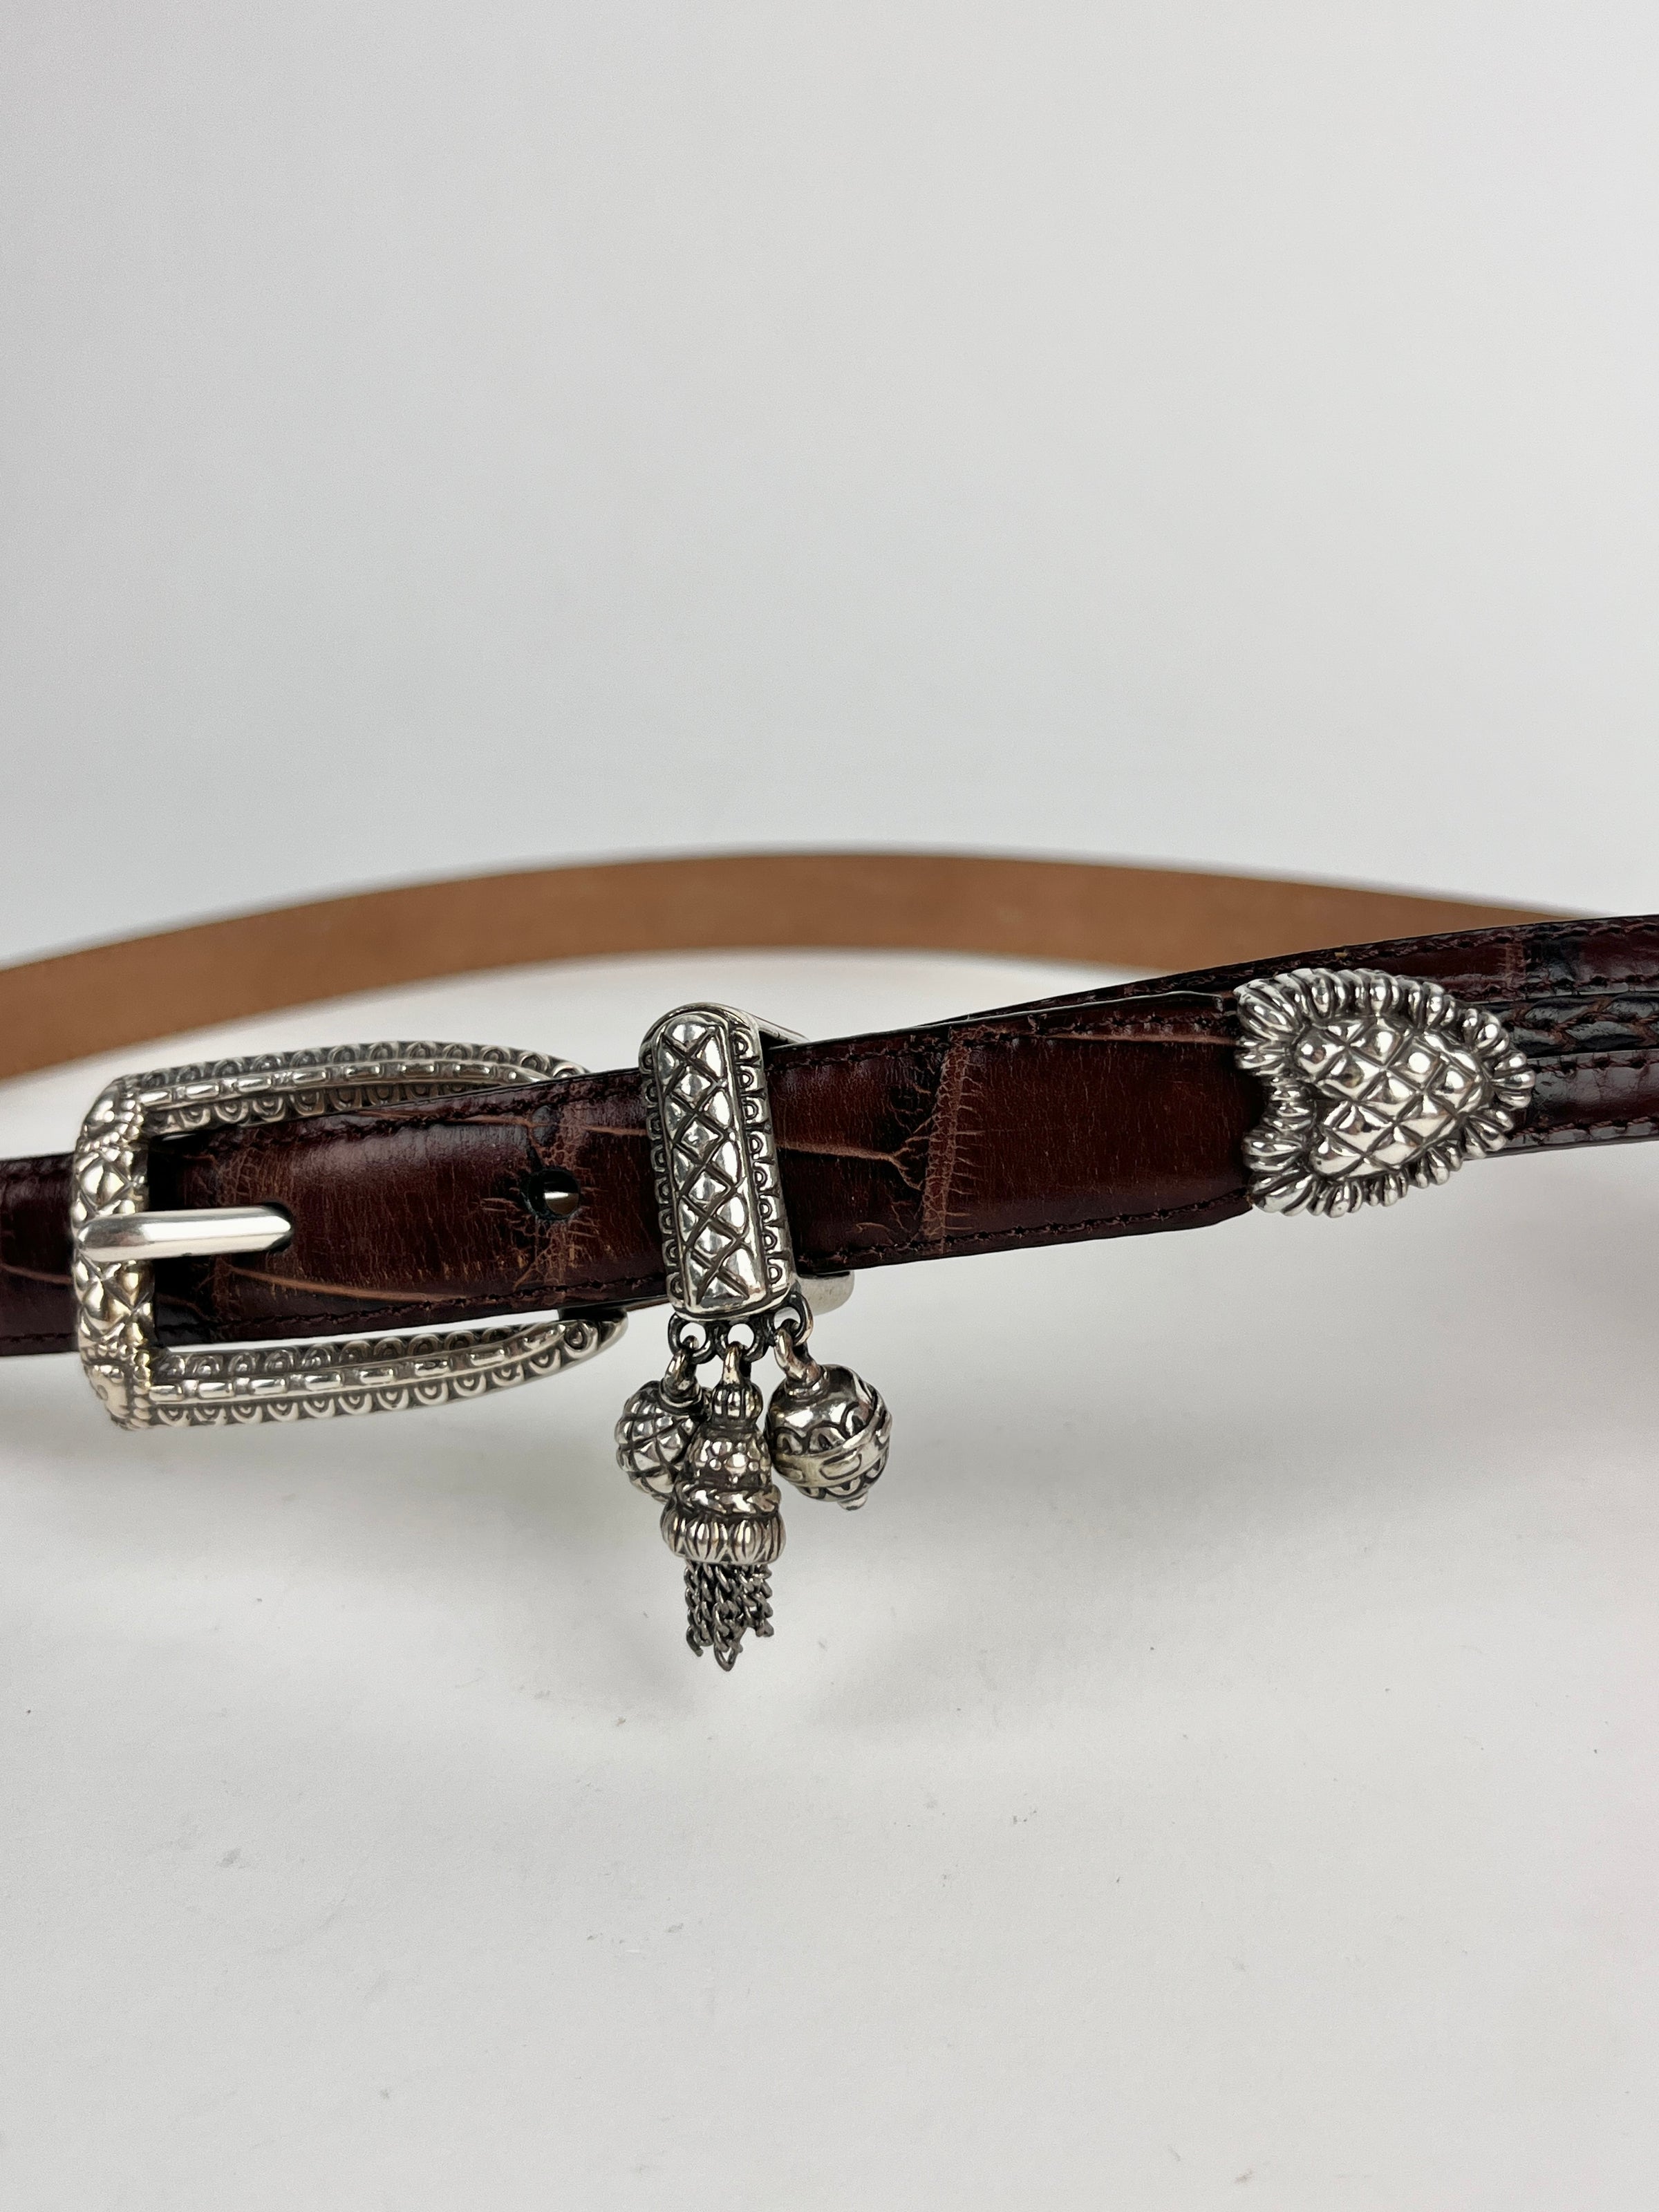 Vintage Brighton Cherub Belt Size L Black dated 1993  Vintage leather belts,  Genuine leather belt, Brown leather belt